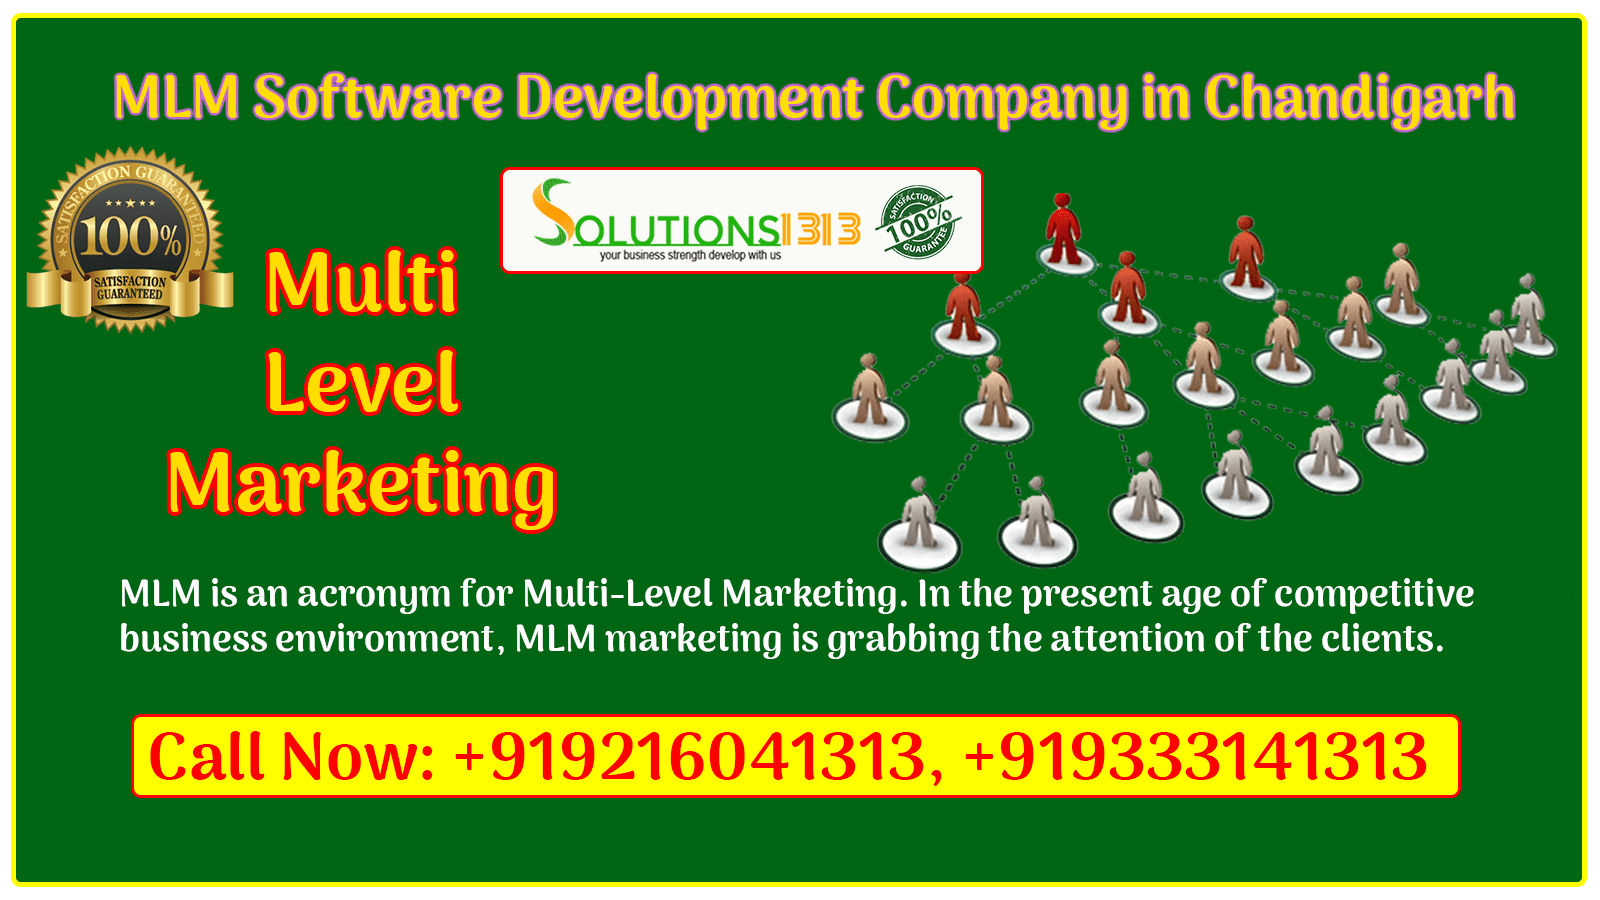 MLM Software Development Company in Chandigarh